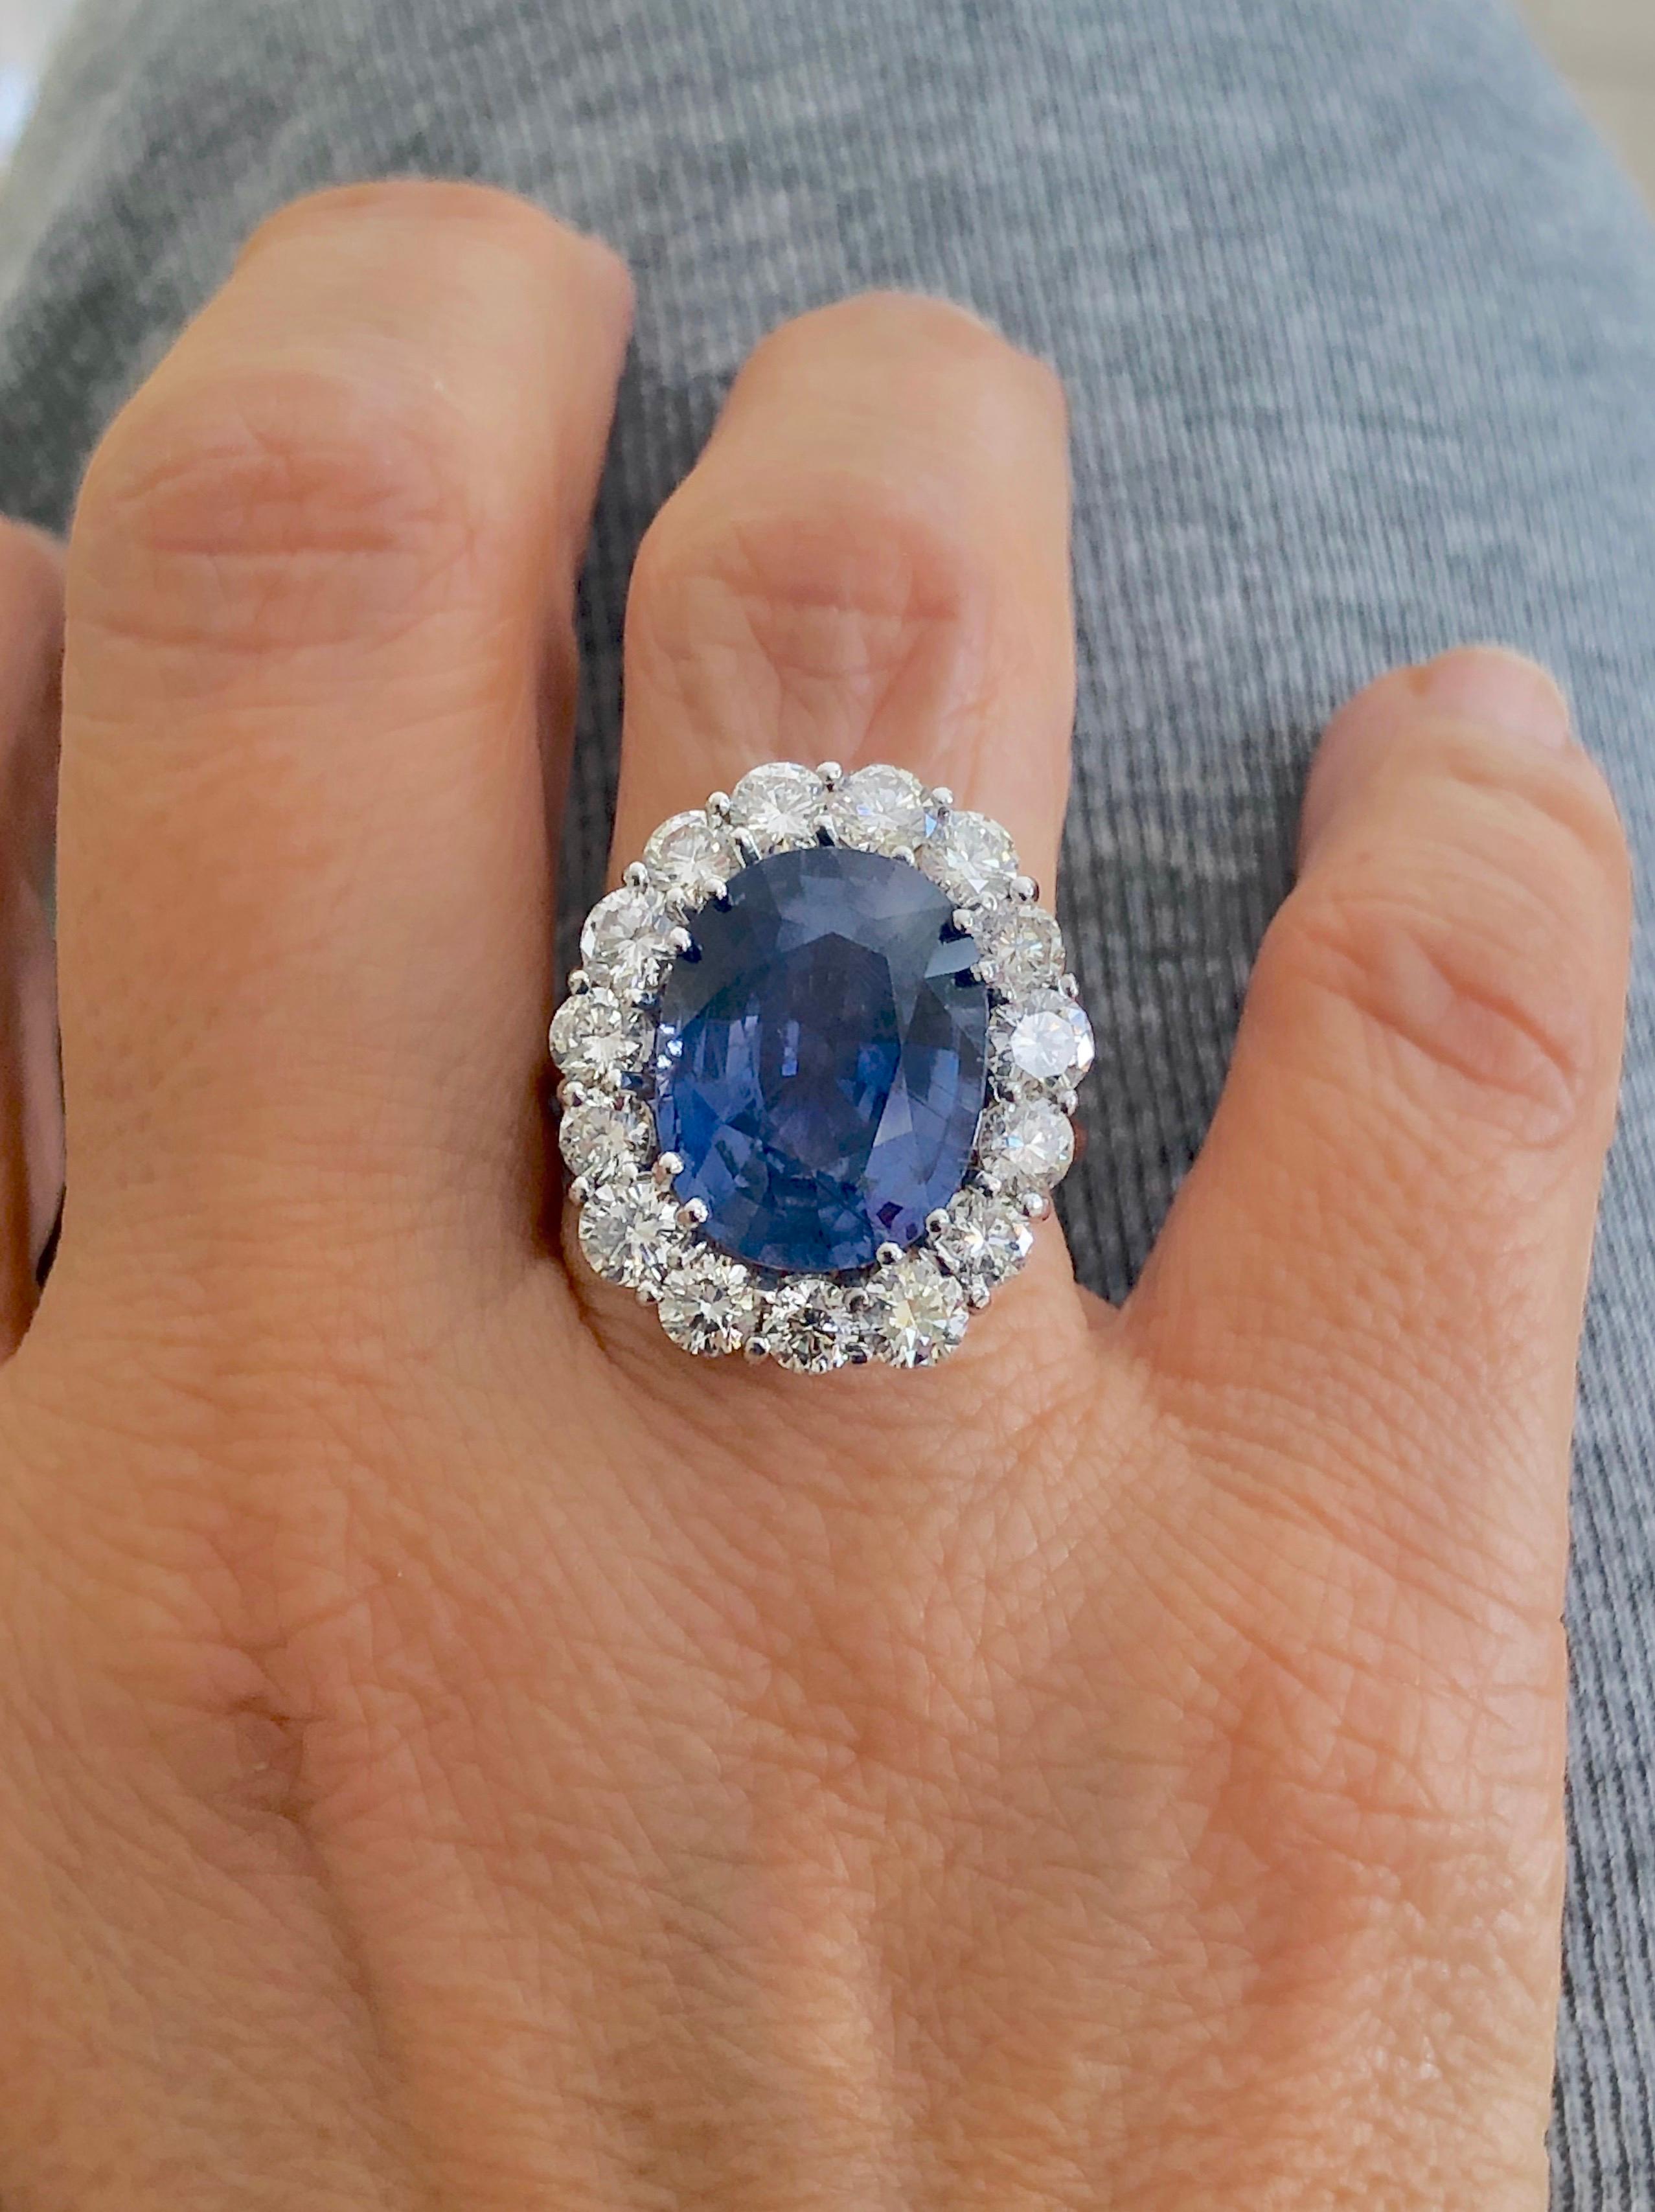 Saphir bleu de Ceylan non chauffé 13,12 carats, pierre précieuse non sertie, coussin certifié en vente 8